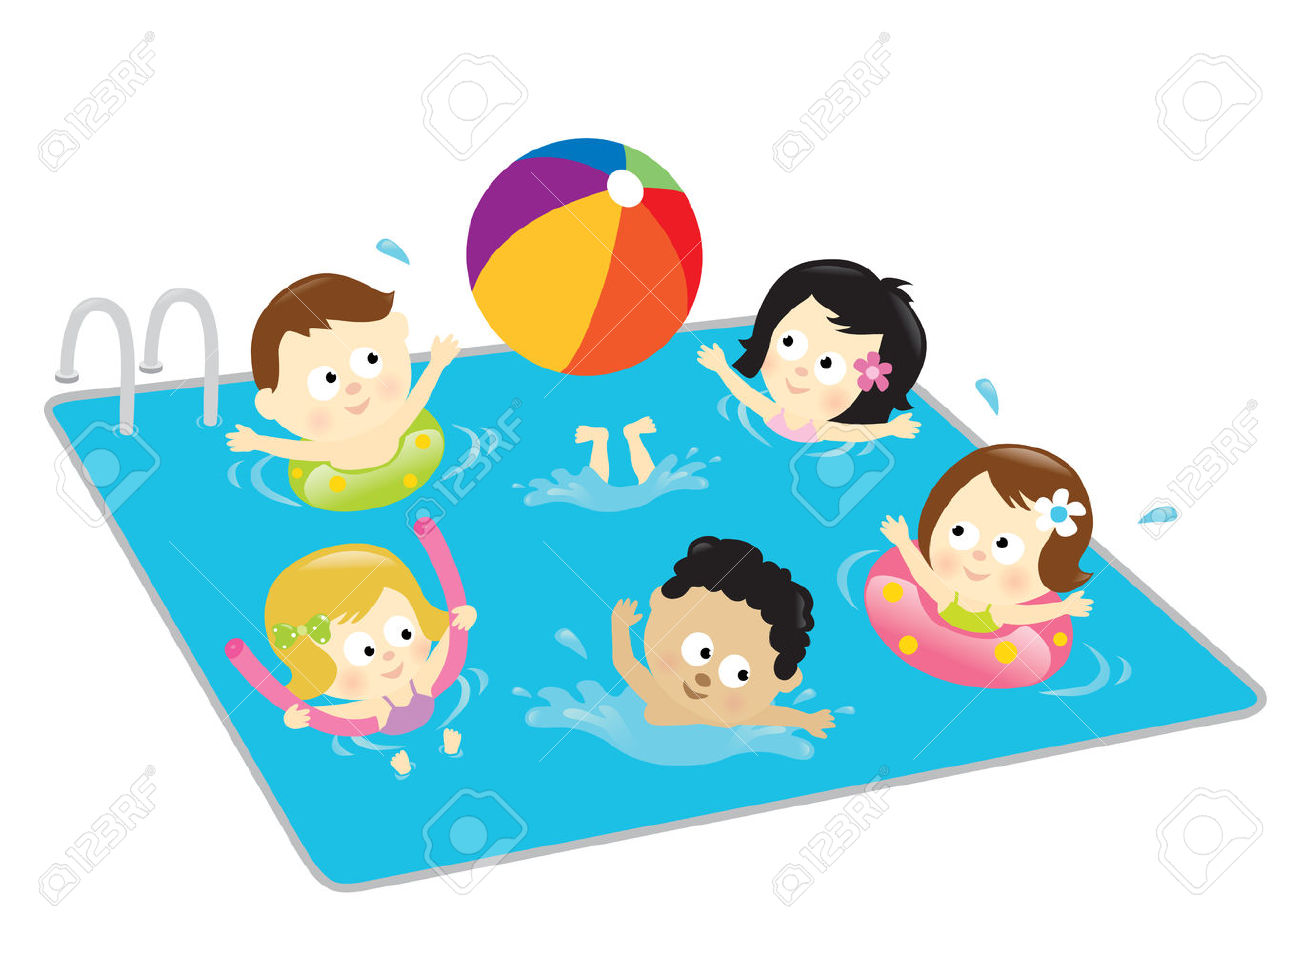 Kids swimming clipart.